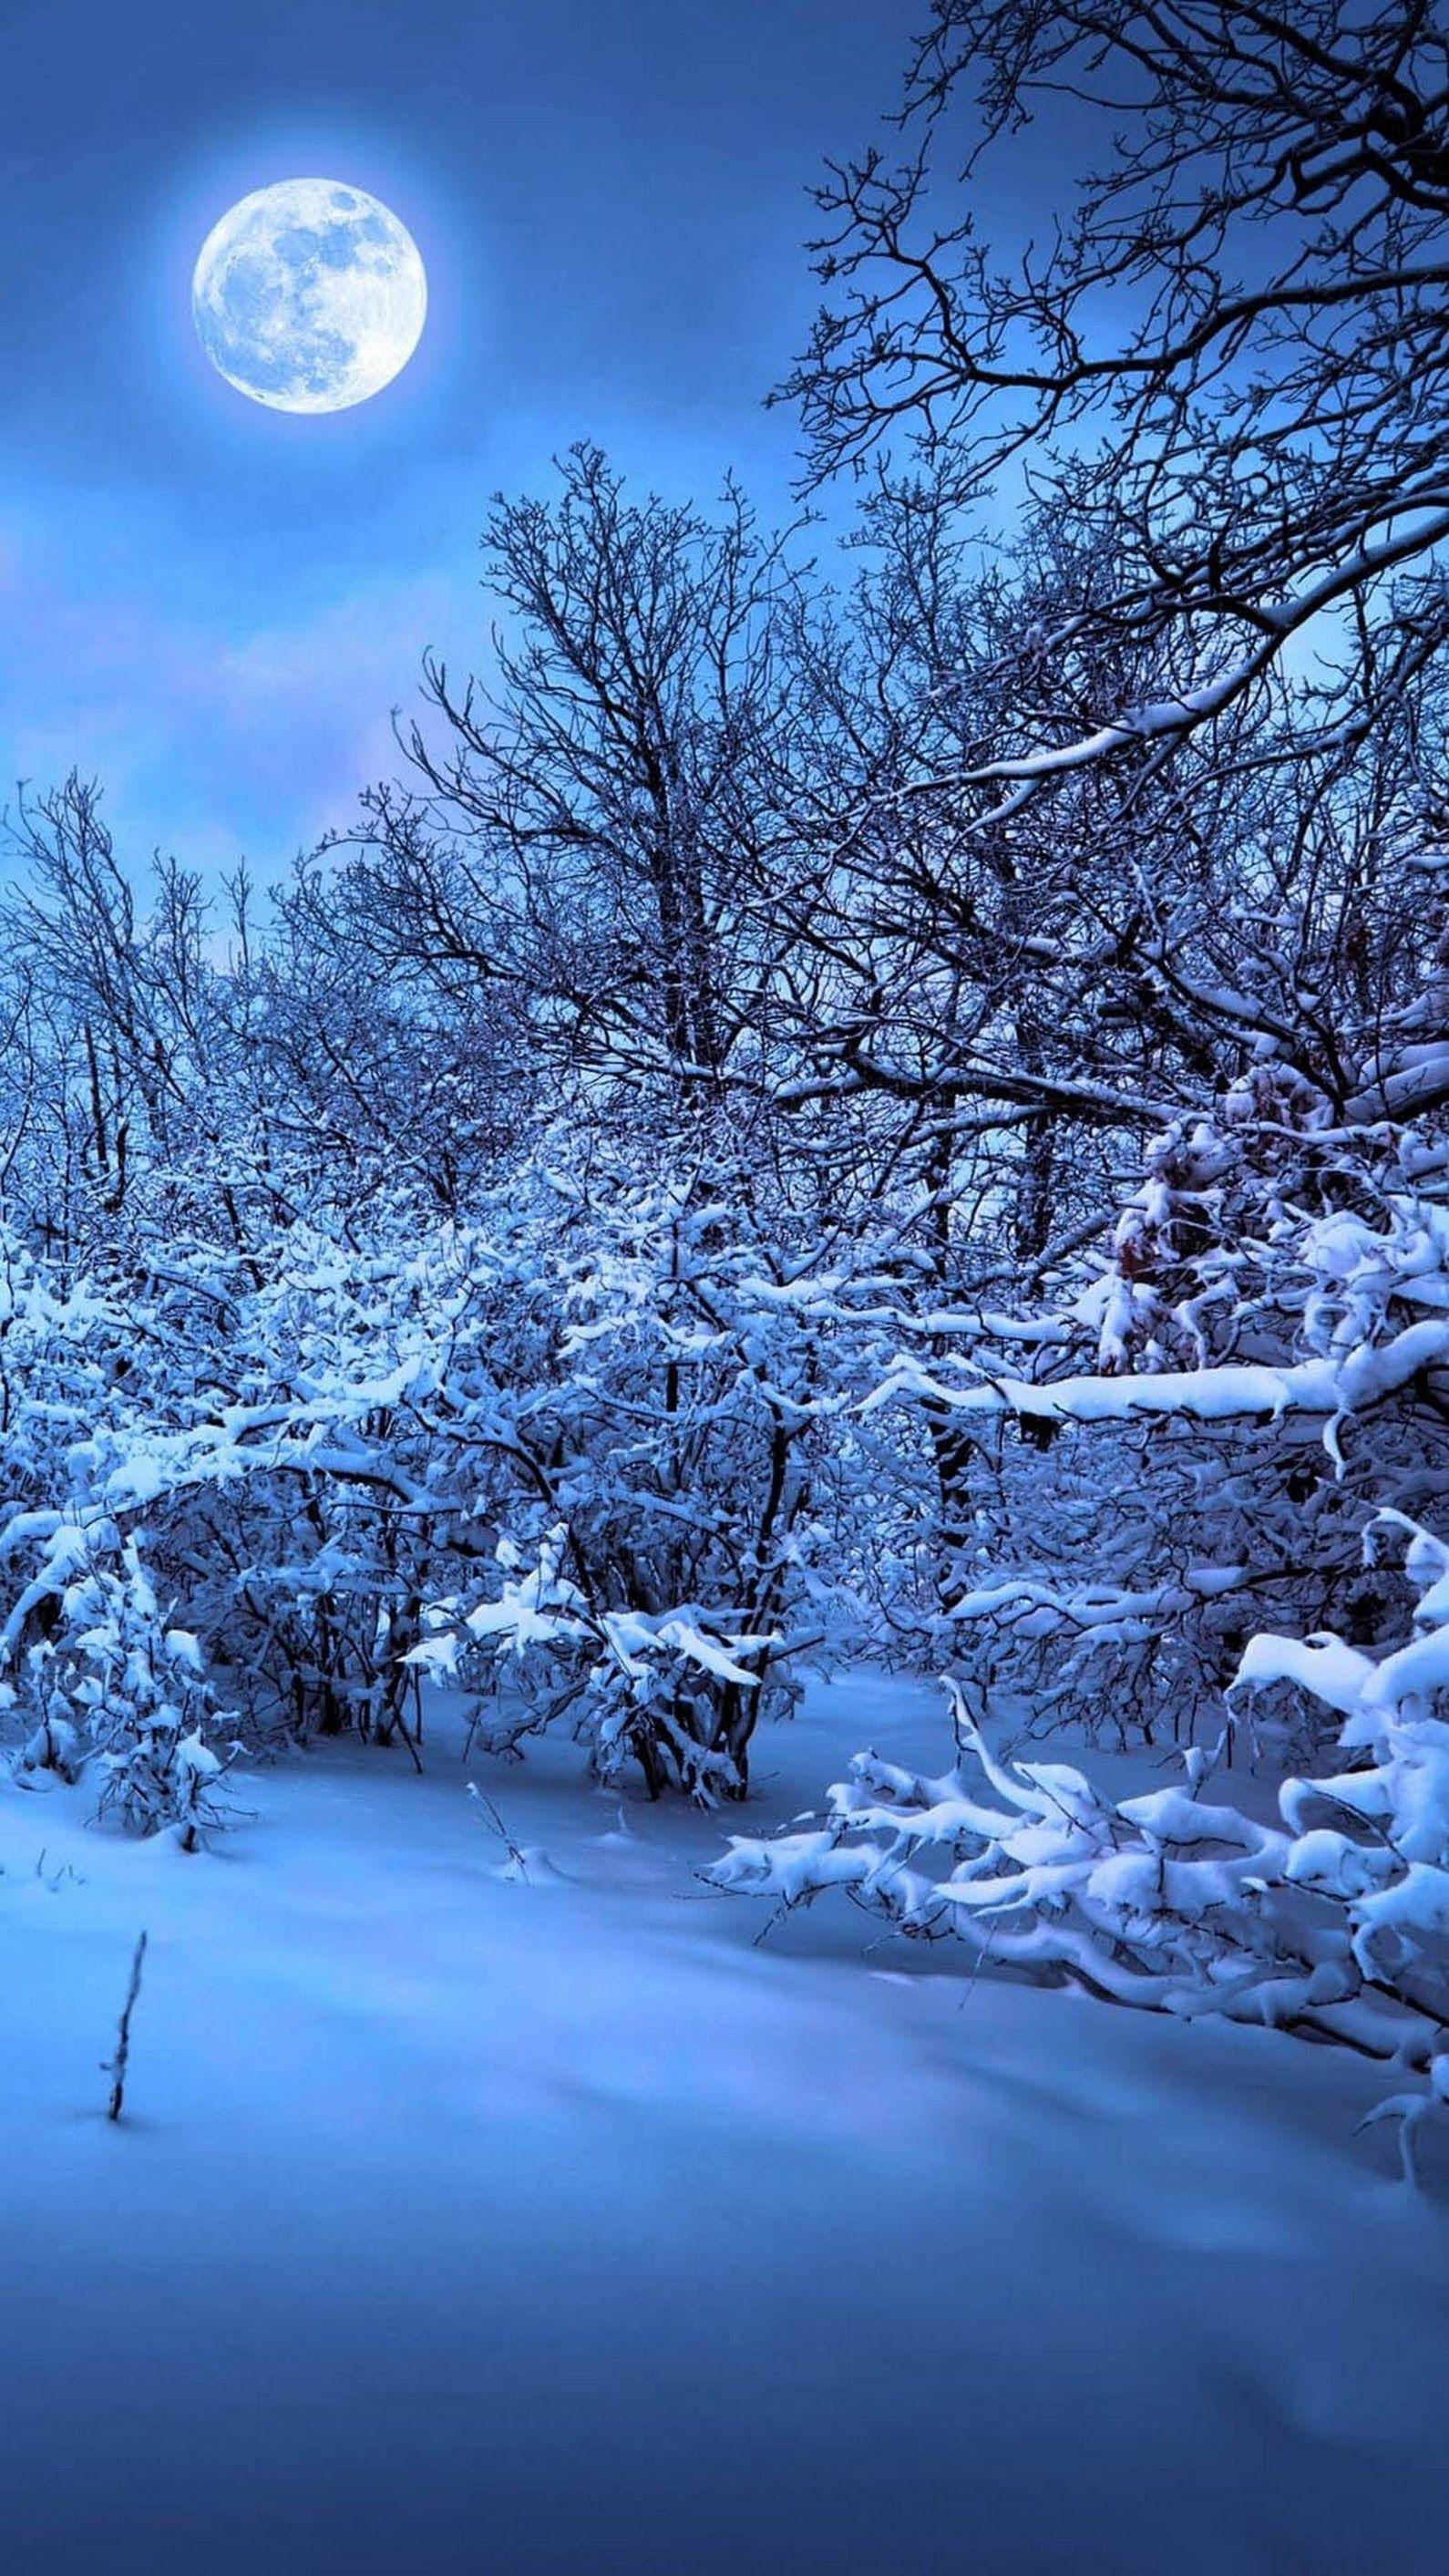 ☮ * ° ♥ ˚ℒℴѵℯ cjf. Winter's Magical Splendor. Winter